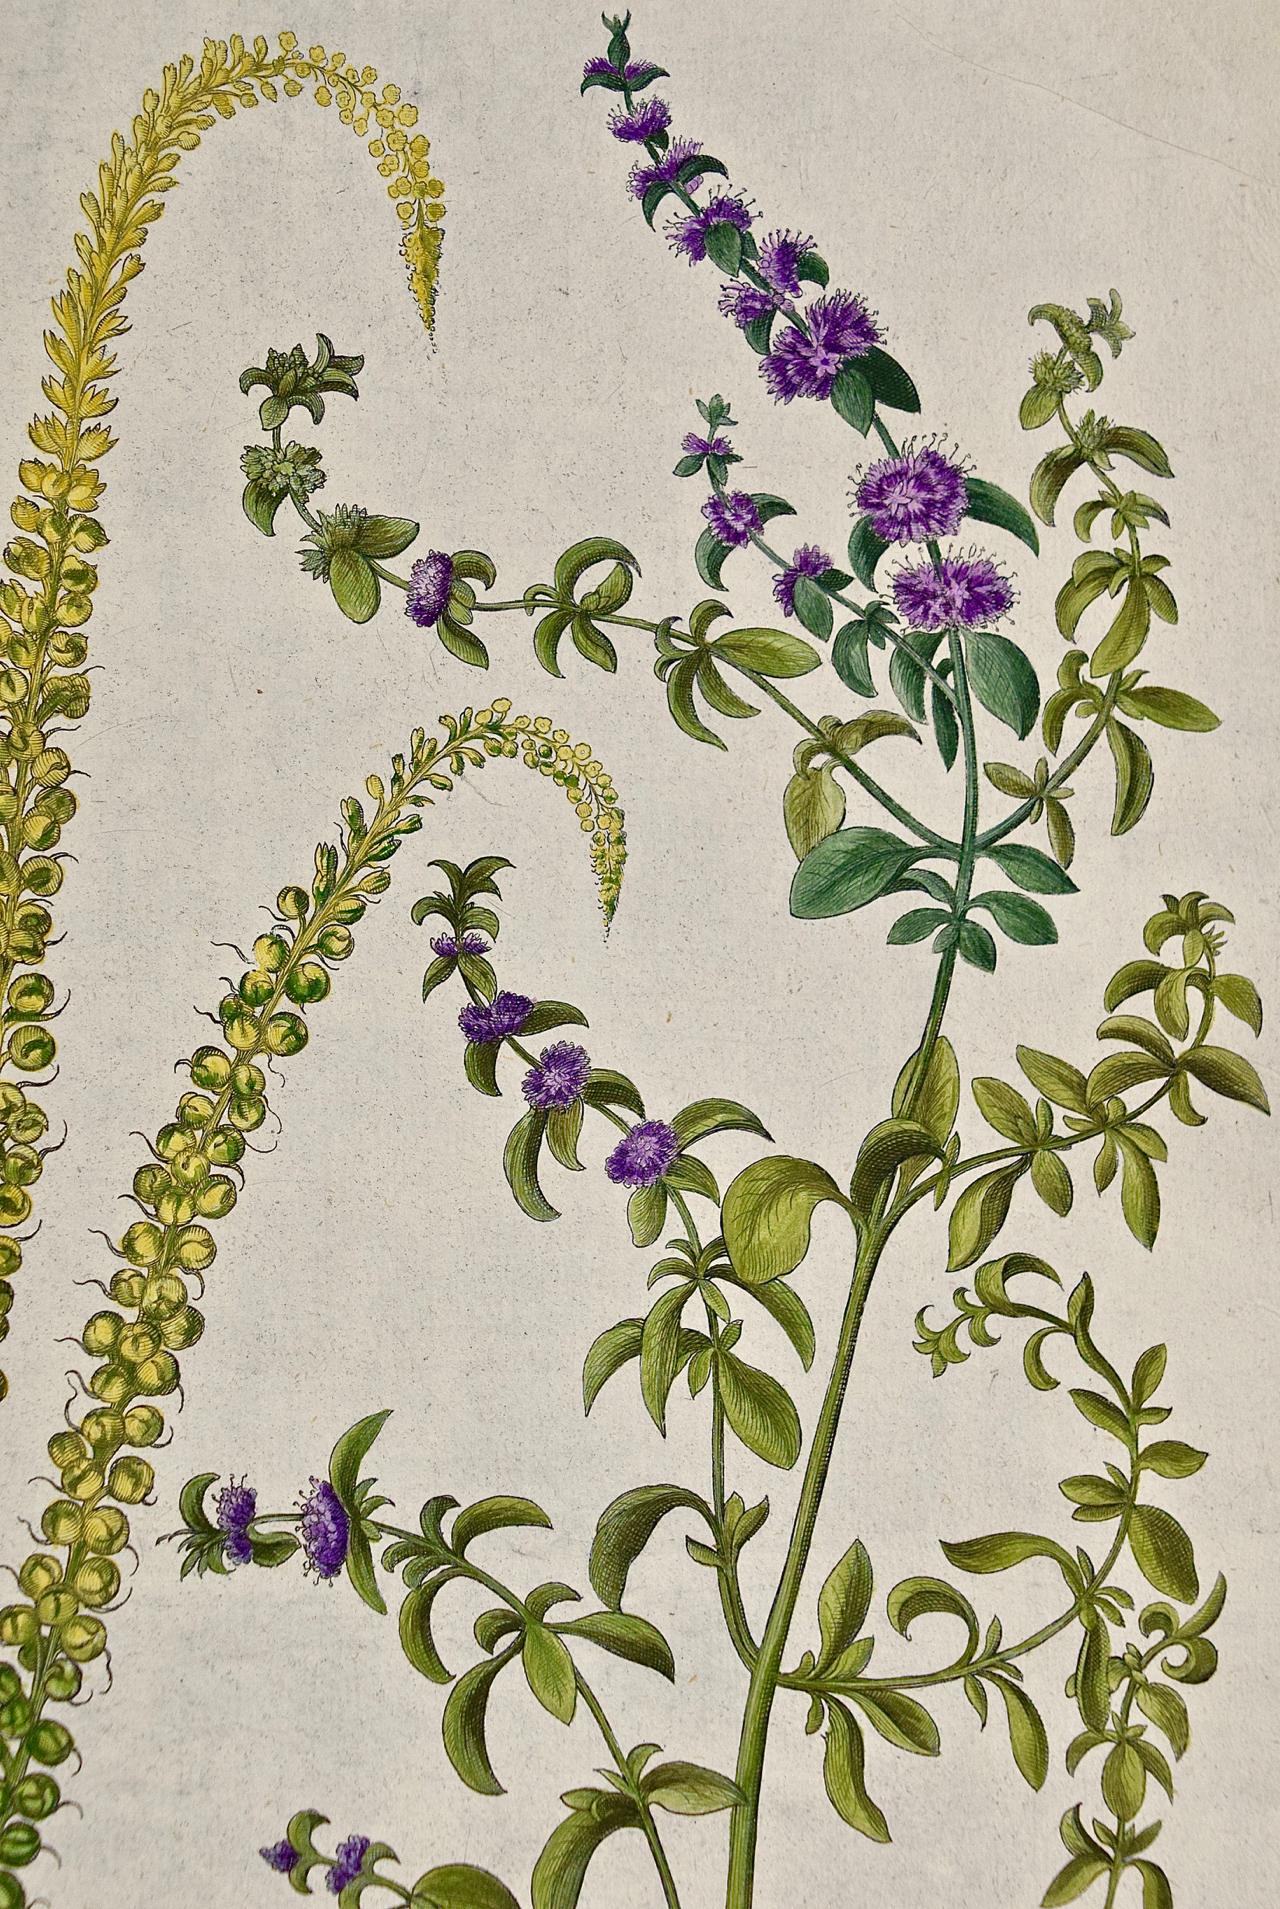 Flowering Peppermint Plants: A 17th C. Besler Hand-colored Botanical Engraving - Academic Print by Basilius Besler